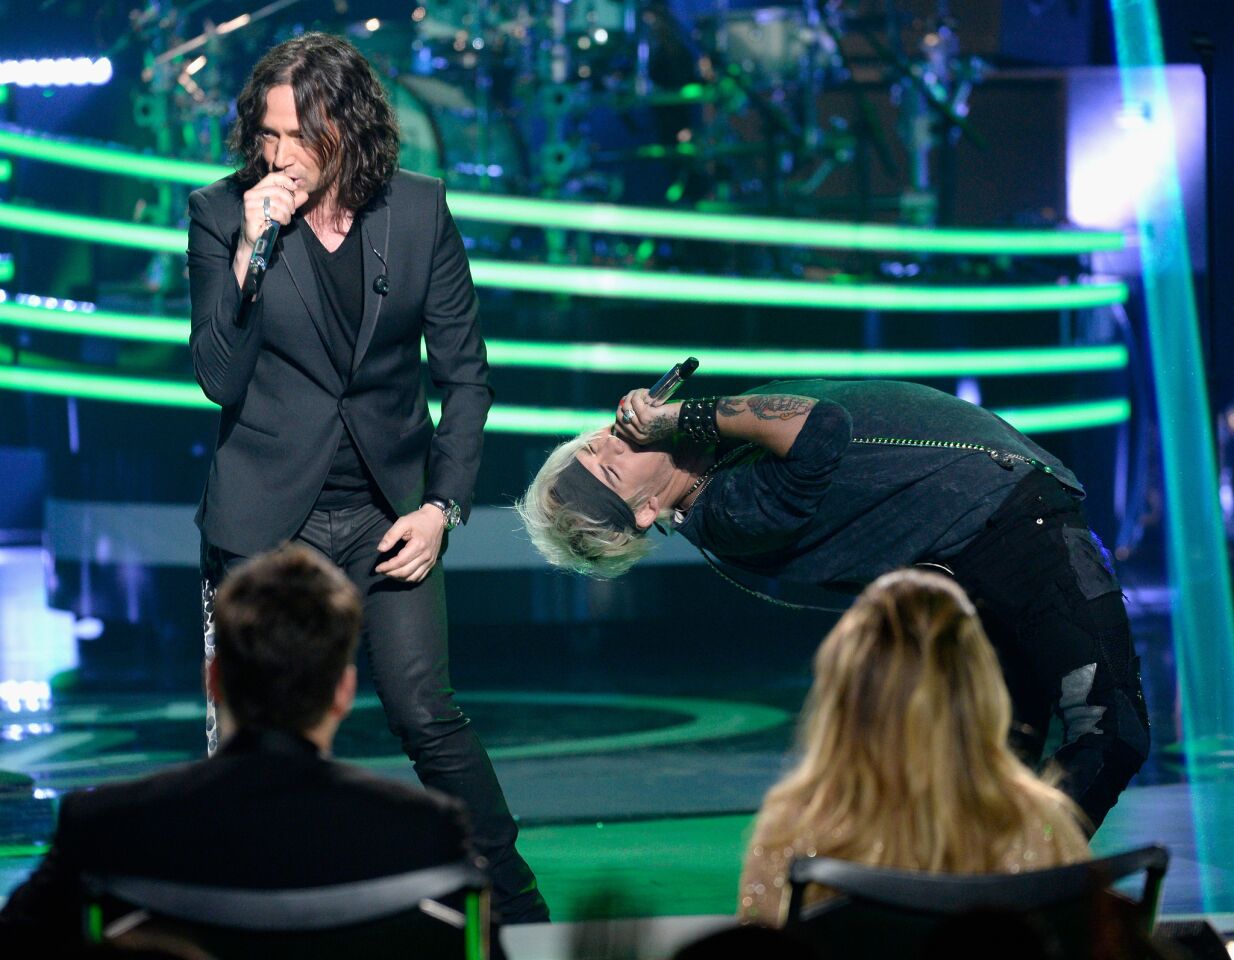 'American Idol' finale